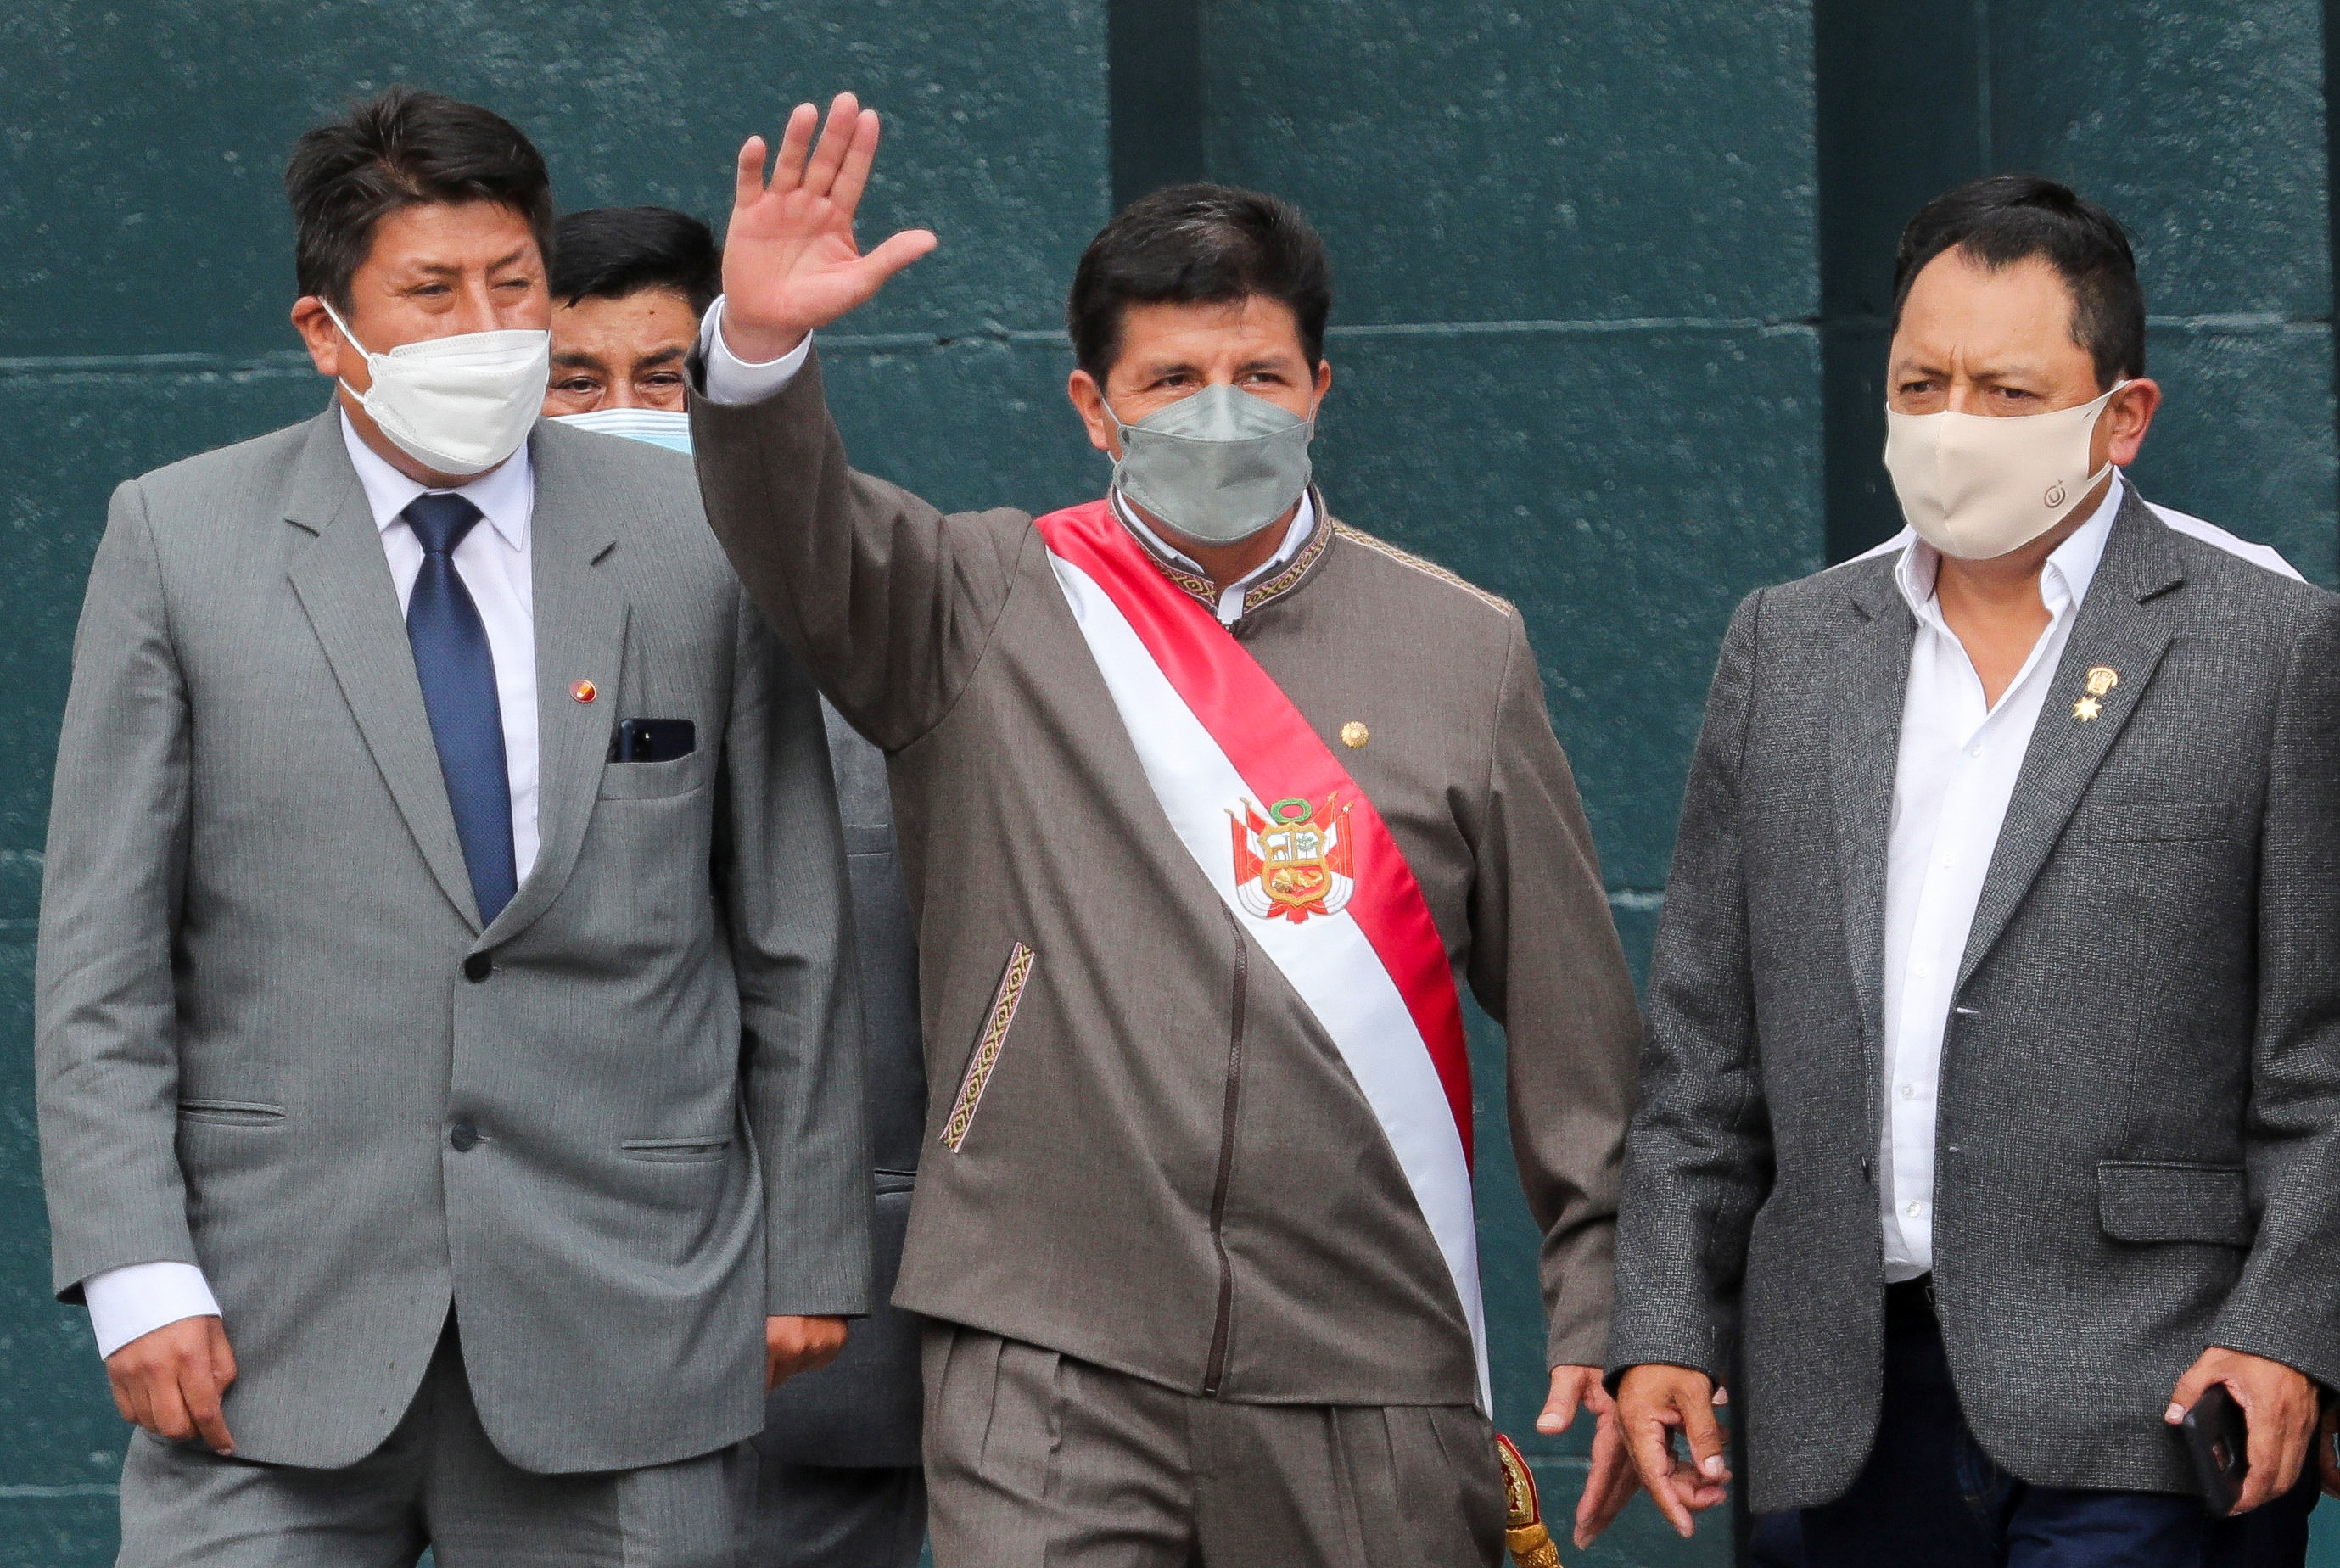 Peru's Congress debates impeachment process against President Castillo